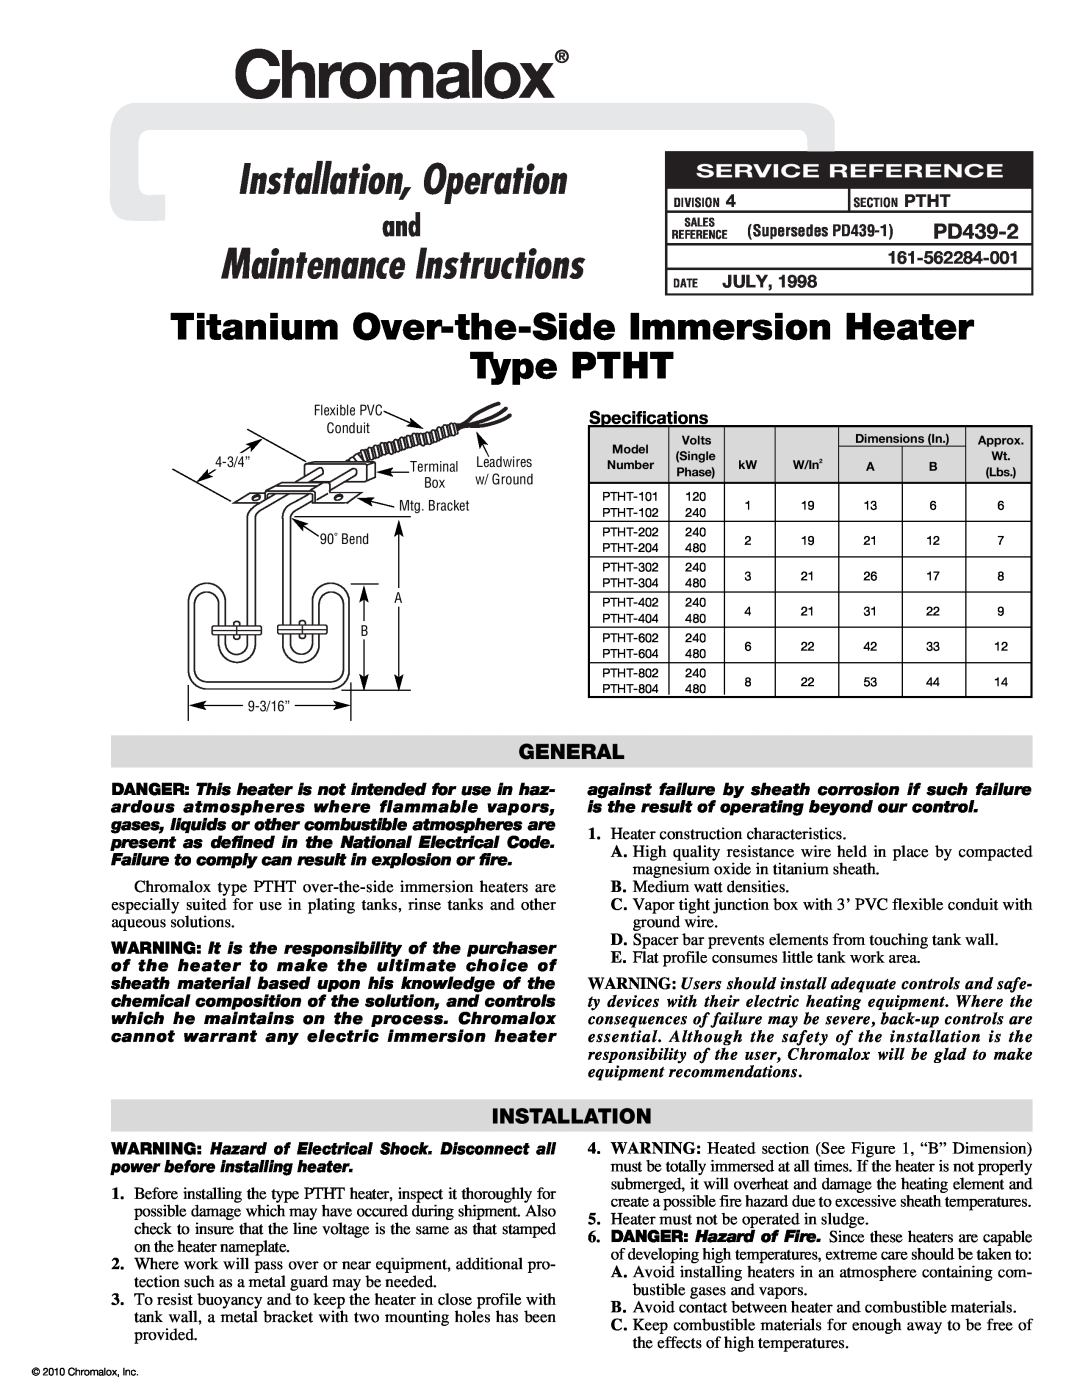 Chromalox PTHT-101 specifications PD439-2, General, Chromalox, Installation, Operation, Maintenance Instructions 